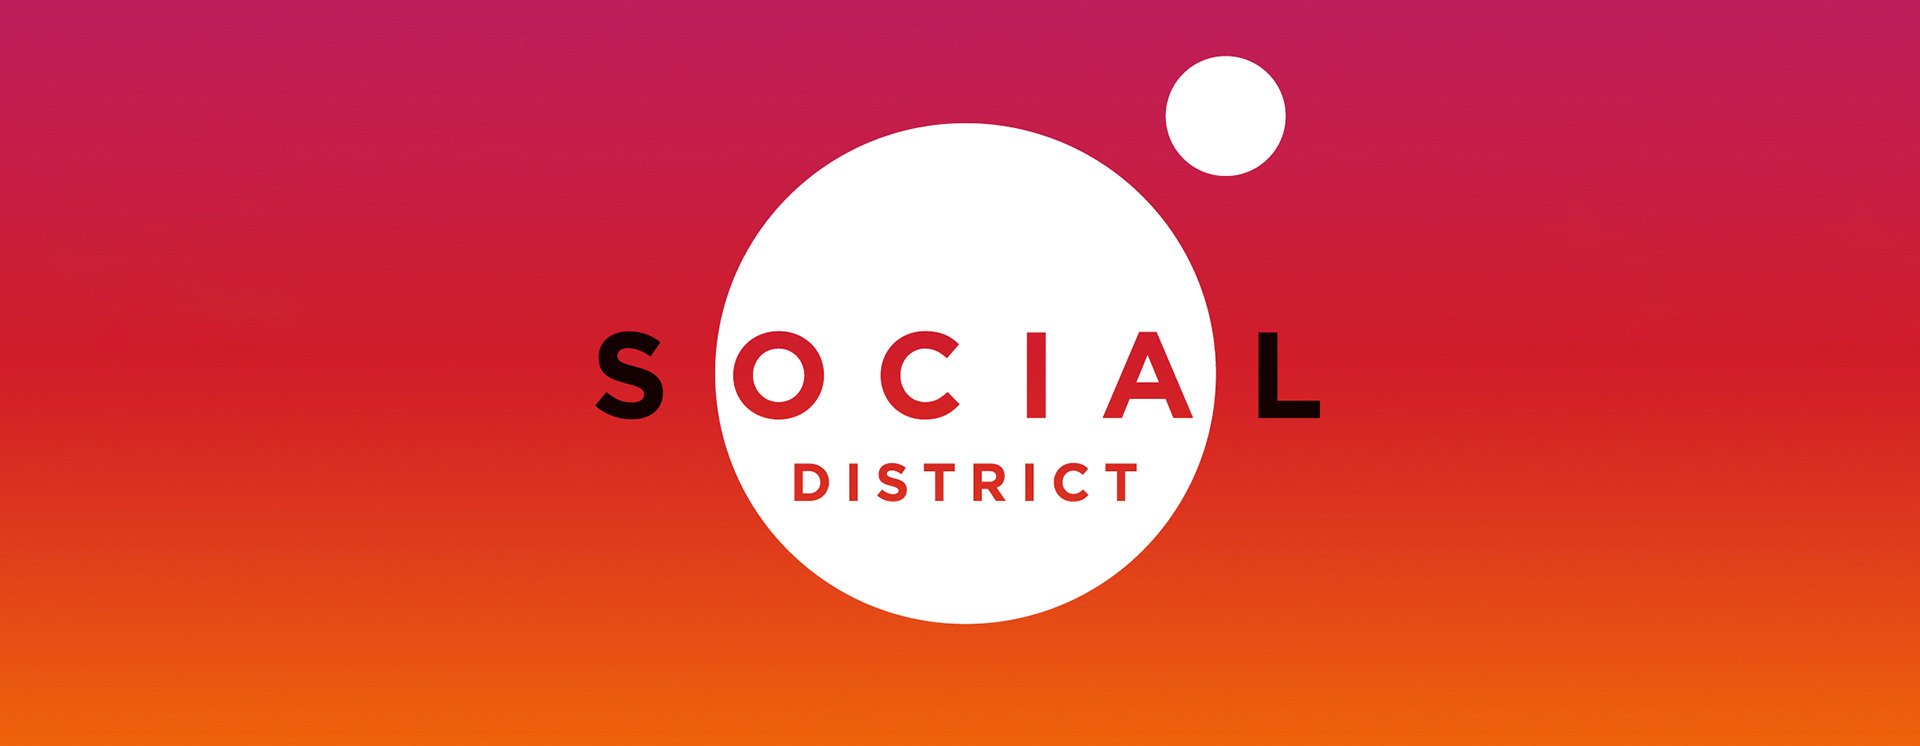 social district